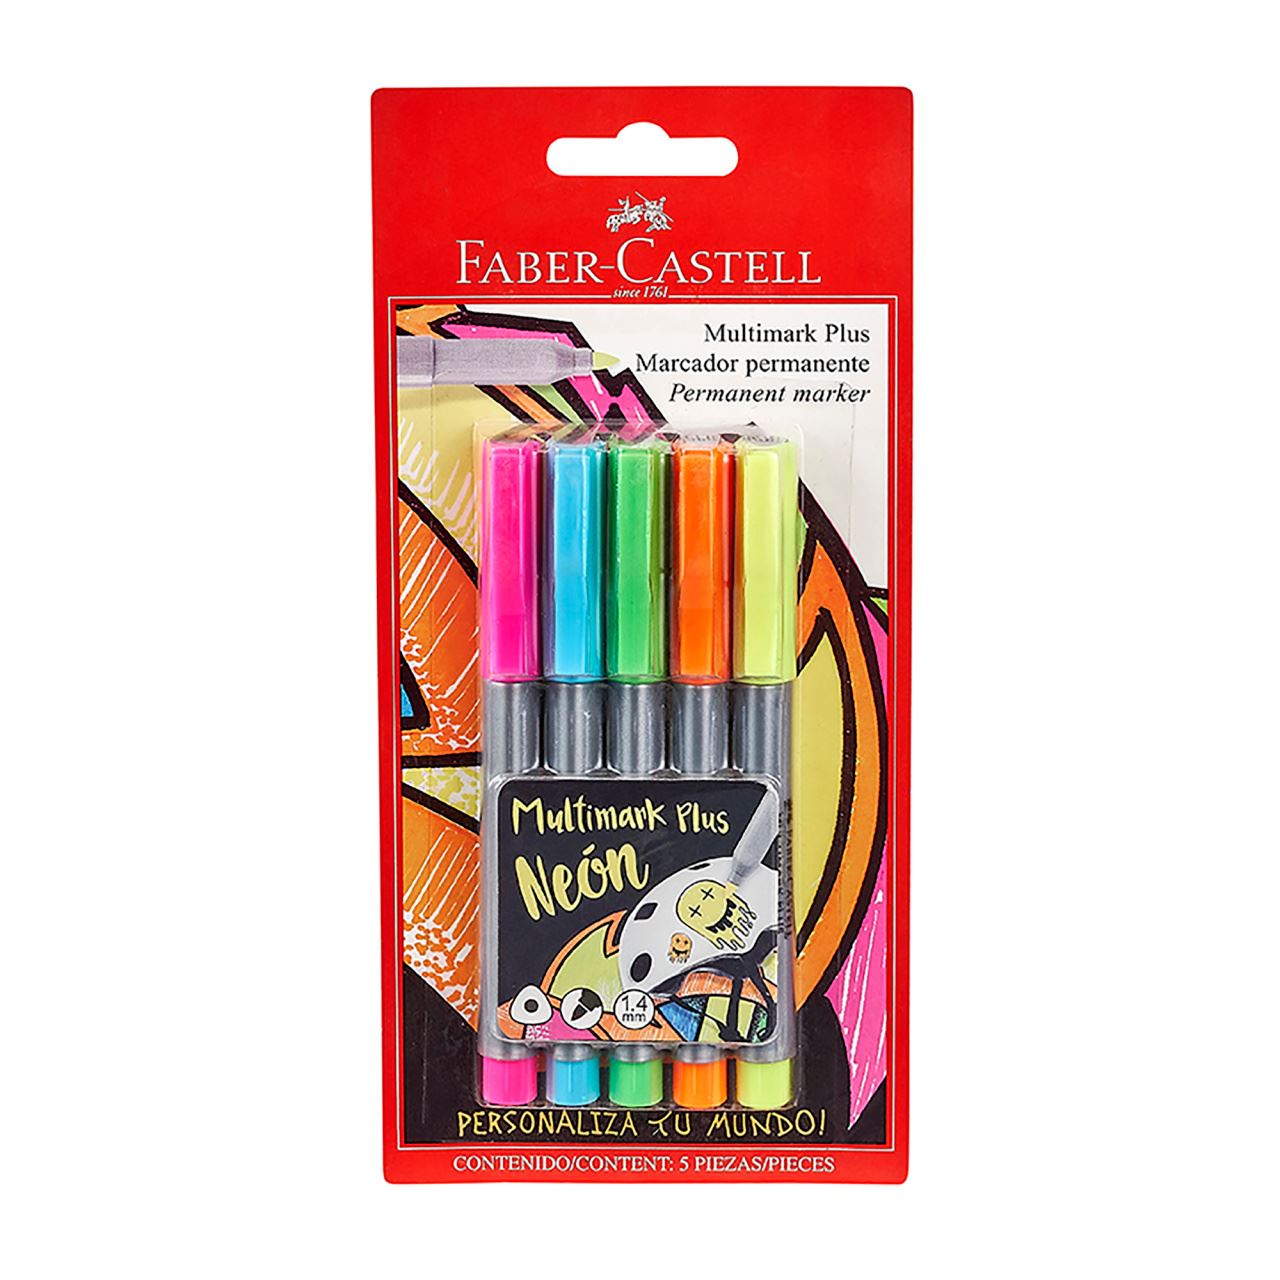 Faber-Castell - 5 Multimark Plus neon colors